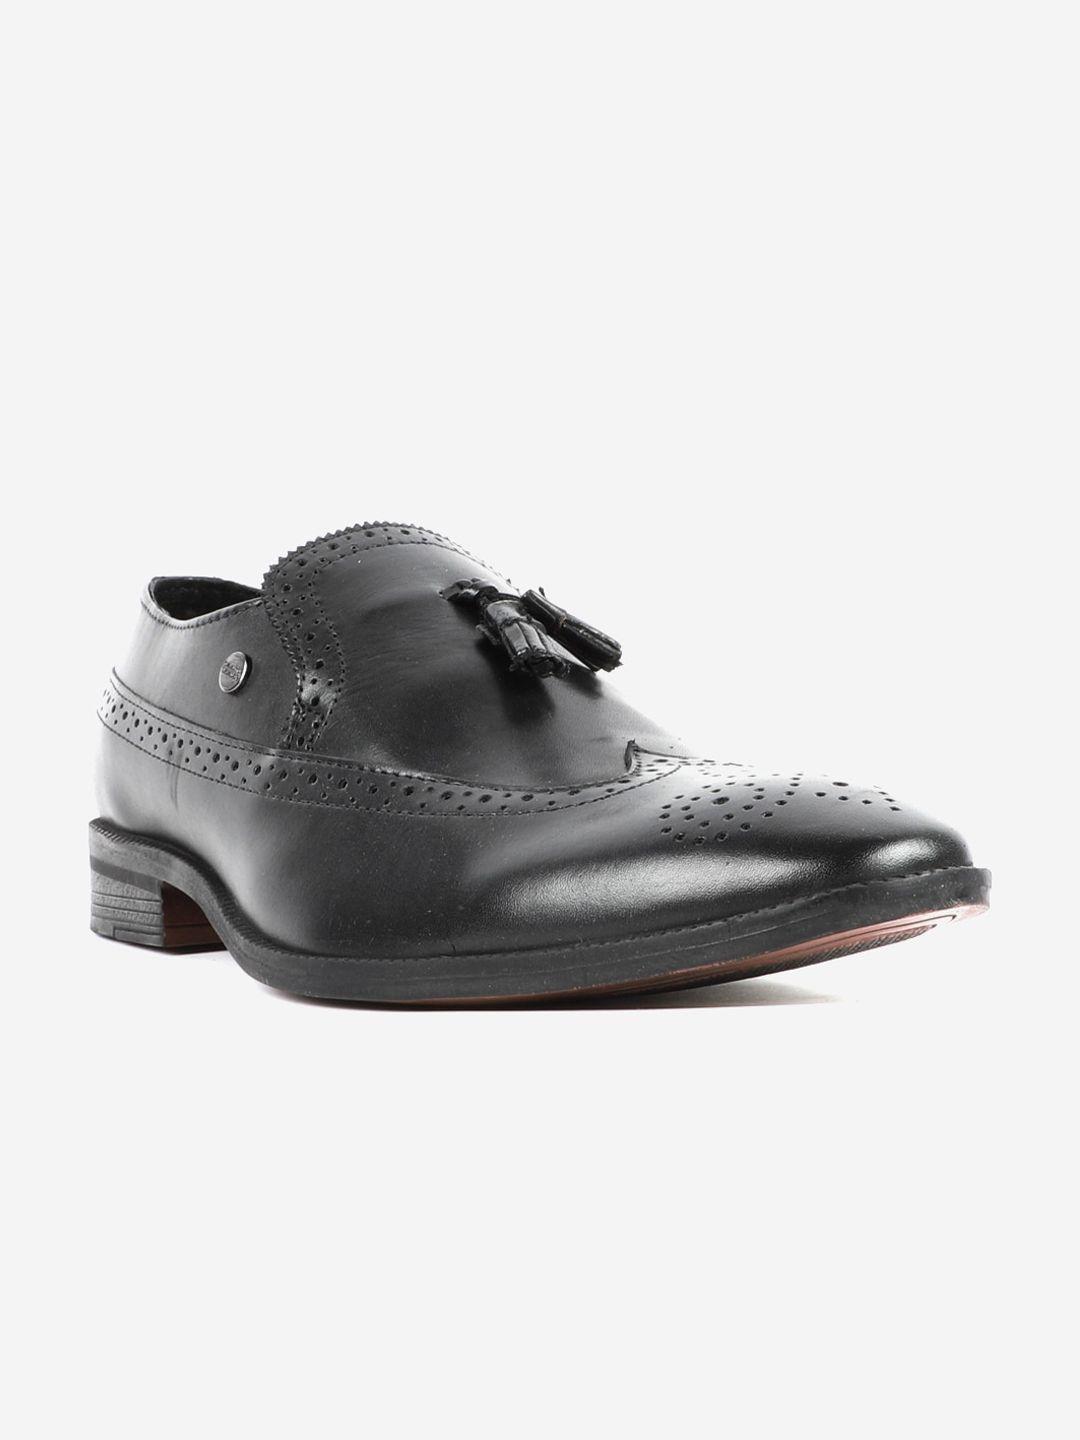 carlton london men black leather slip-on sneakers